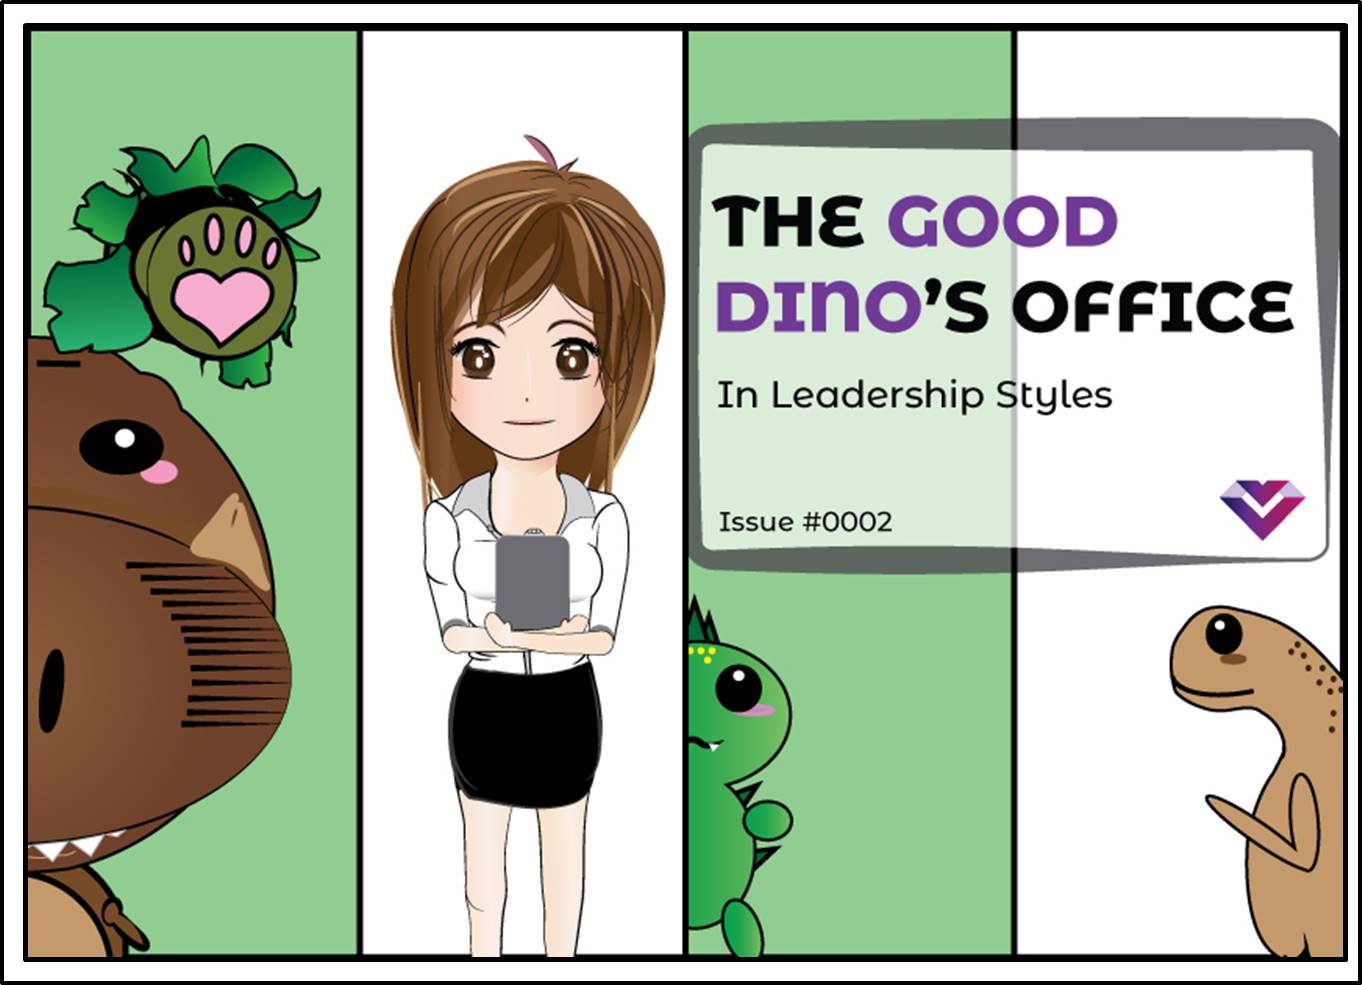 The Good Dino’s Office: Leadership Styles